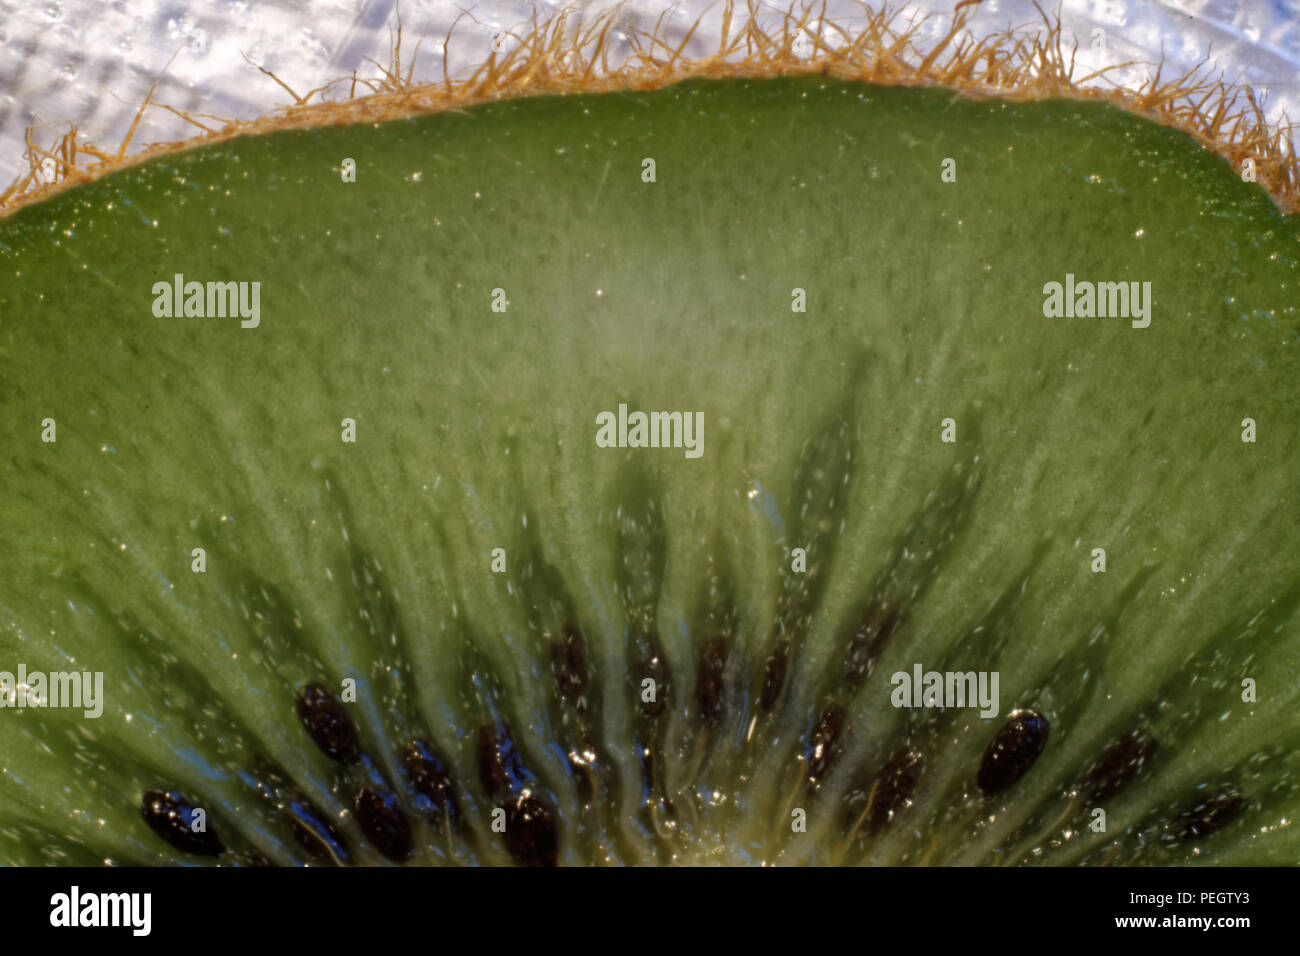 Photo kiwi fruit, Stock Photo